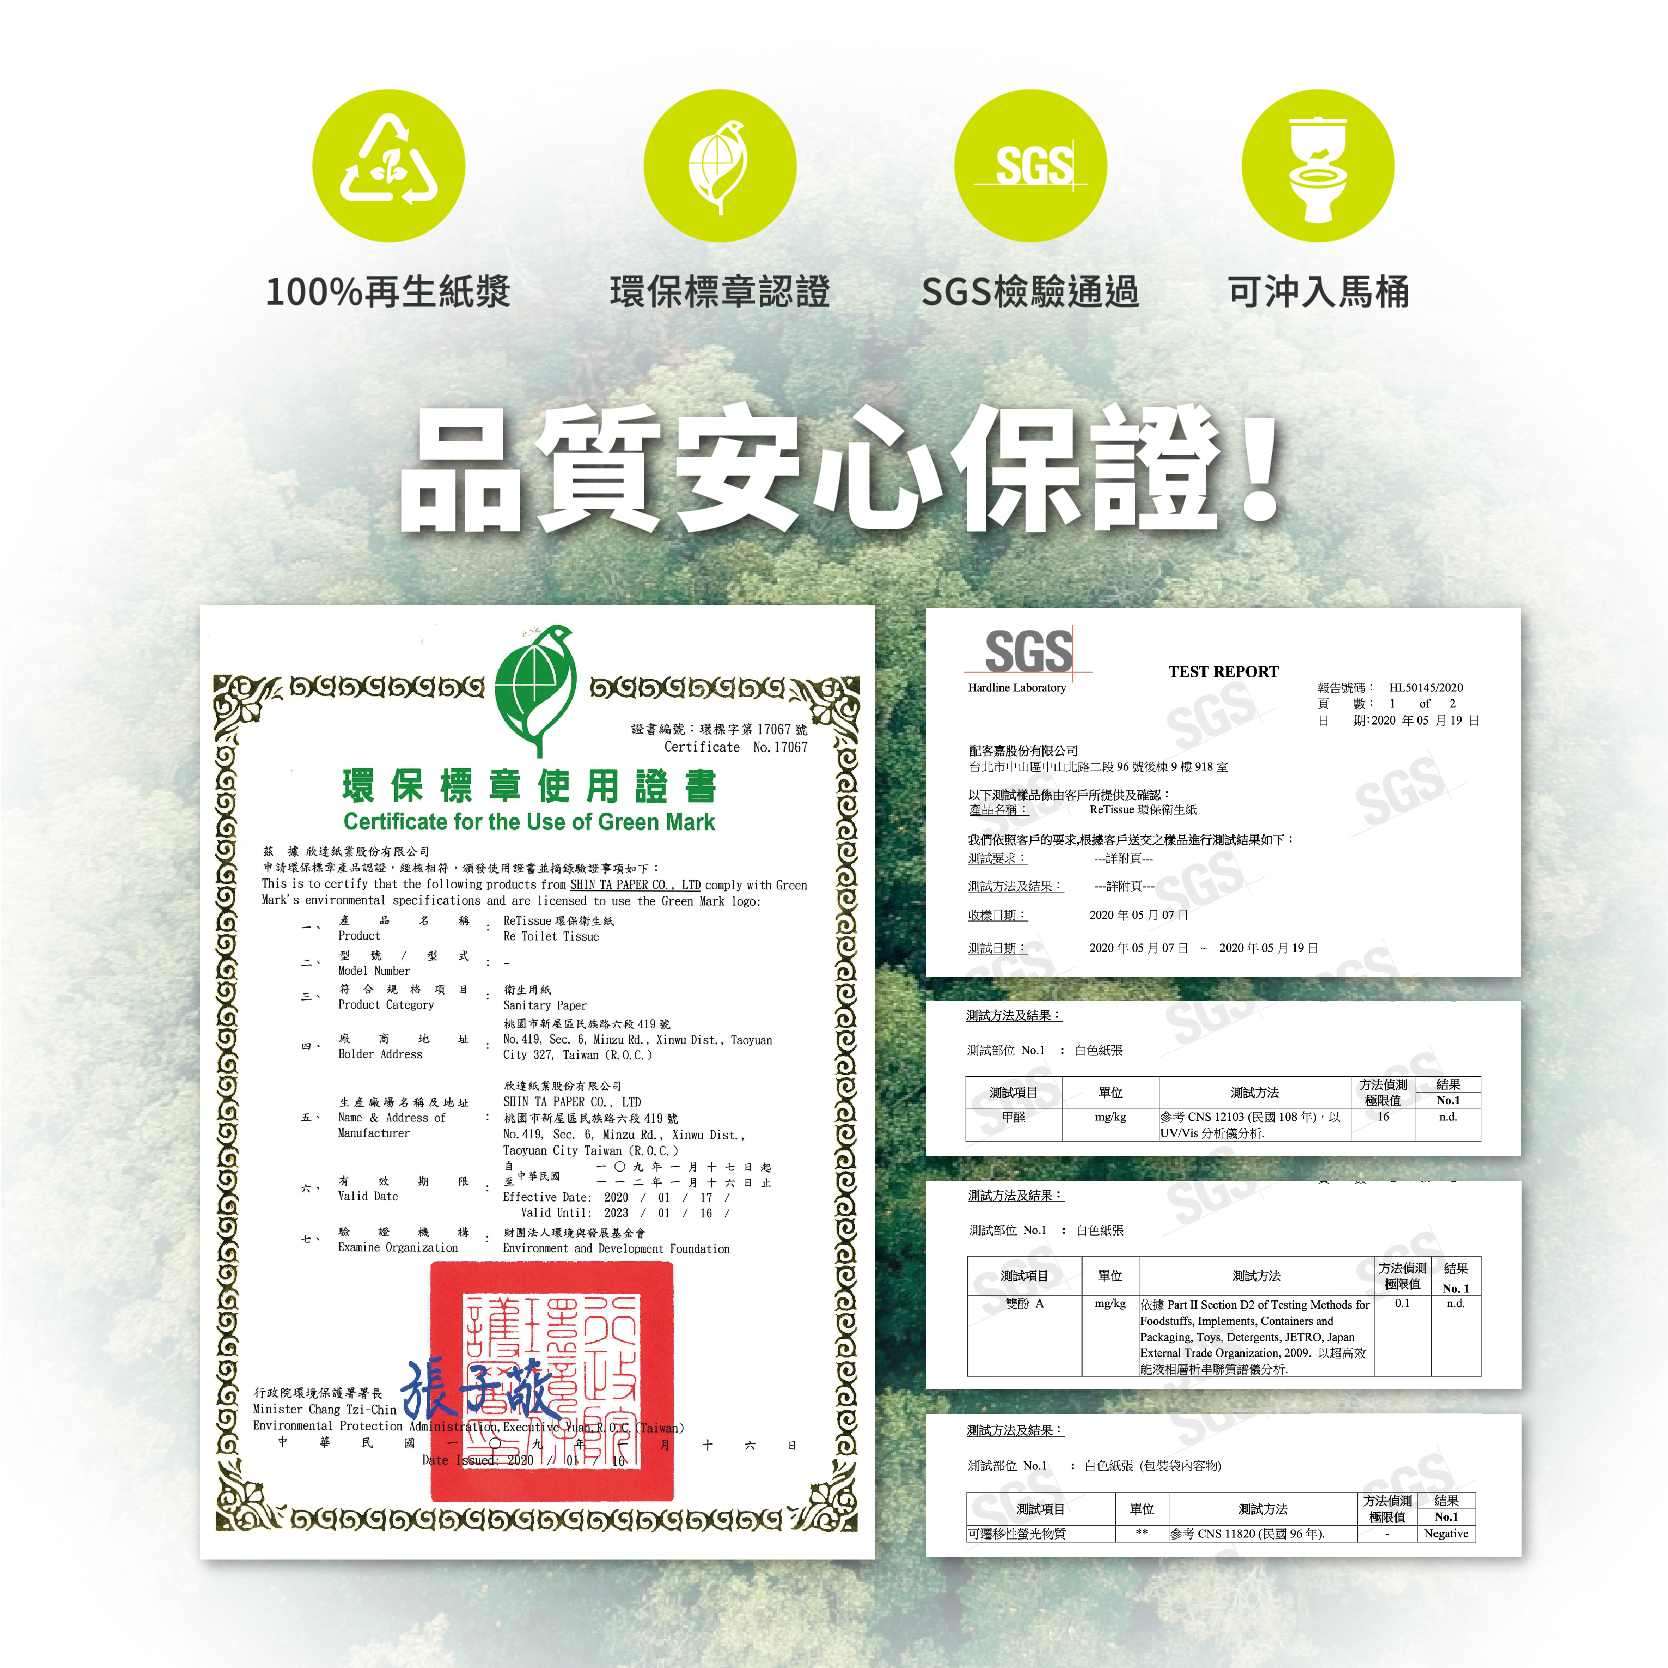 【ReTissue】植樹環保款再生方型抽取式衛生紙(250抽x72包/箱)